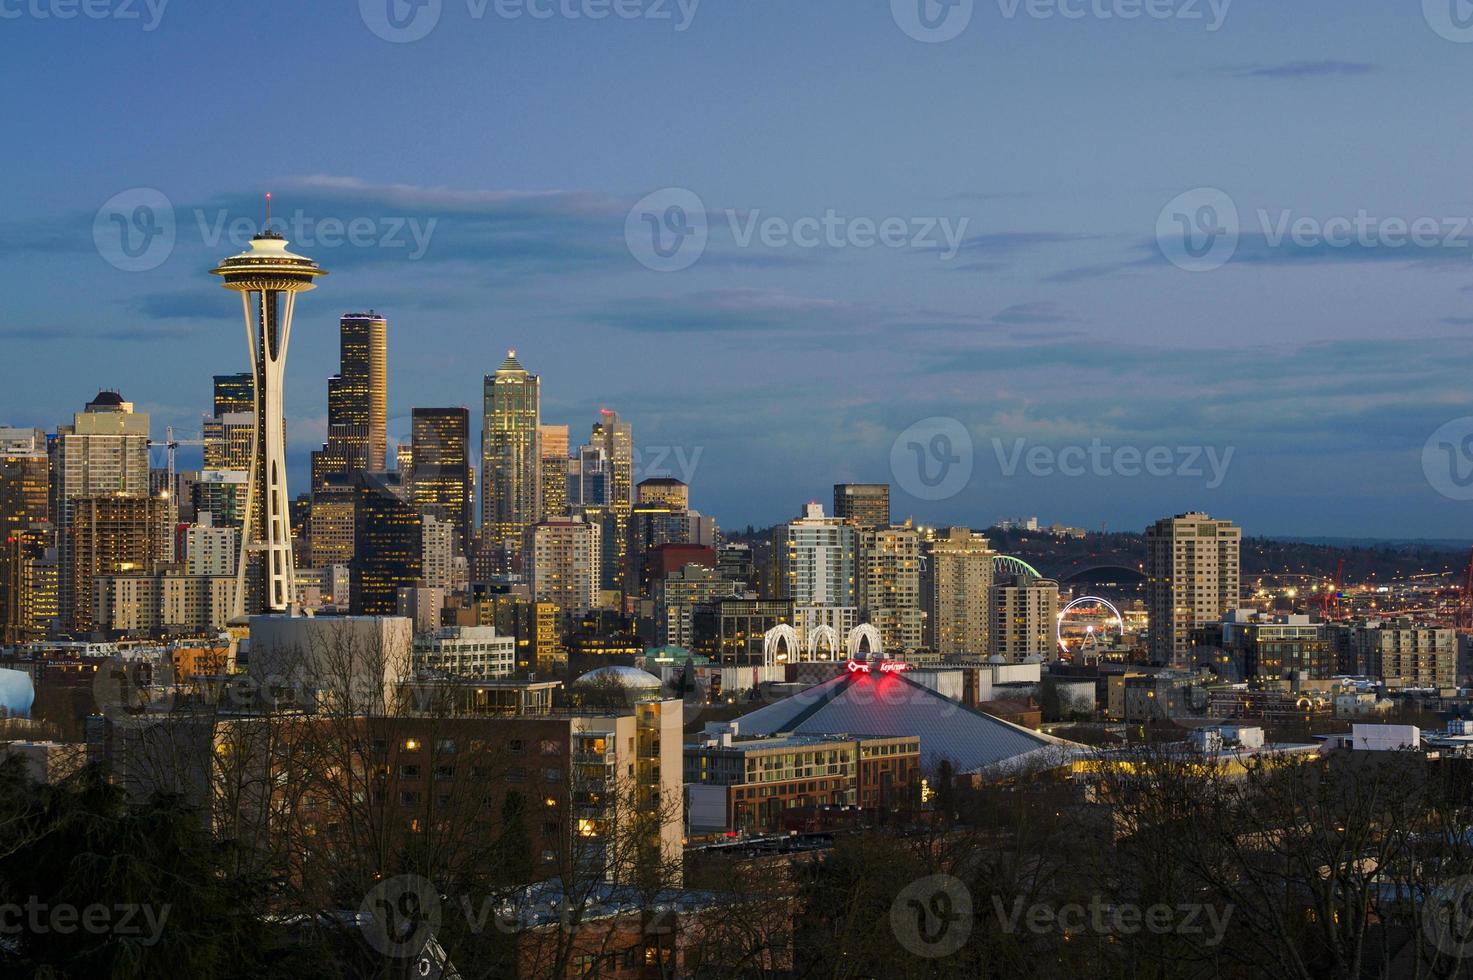 Skyline de Seattle photo